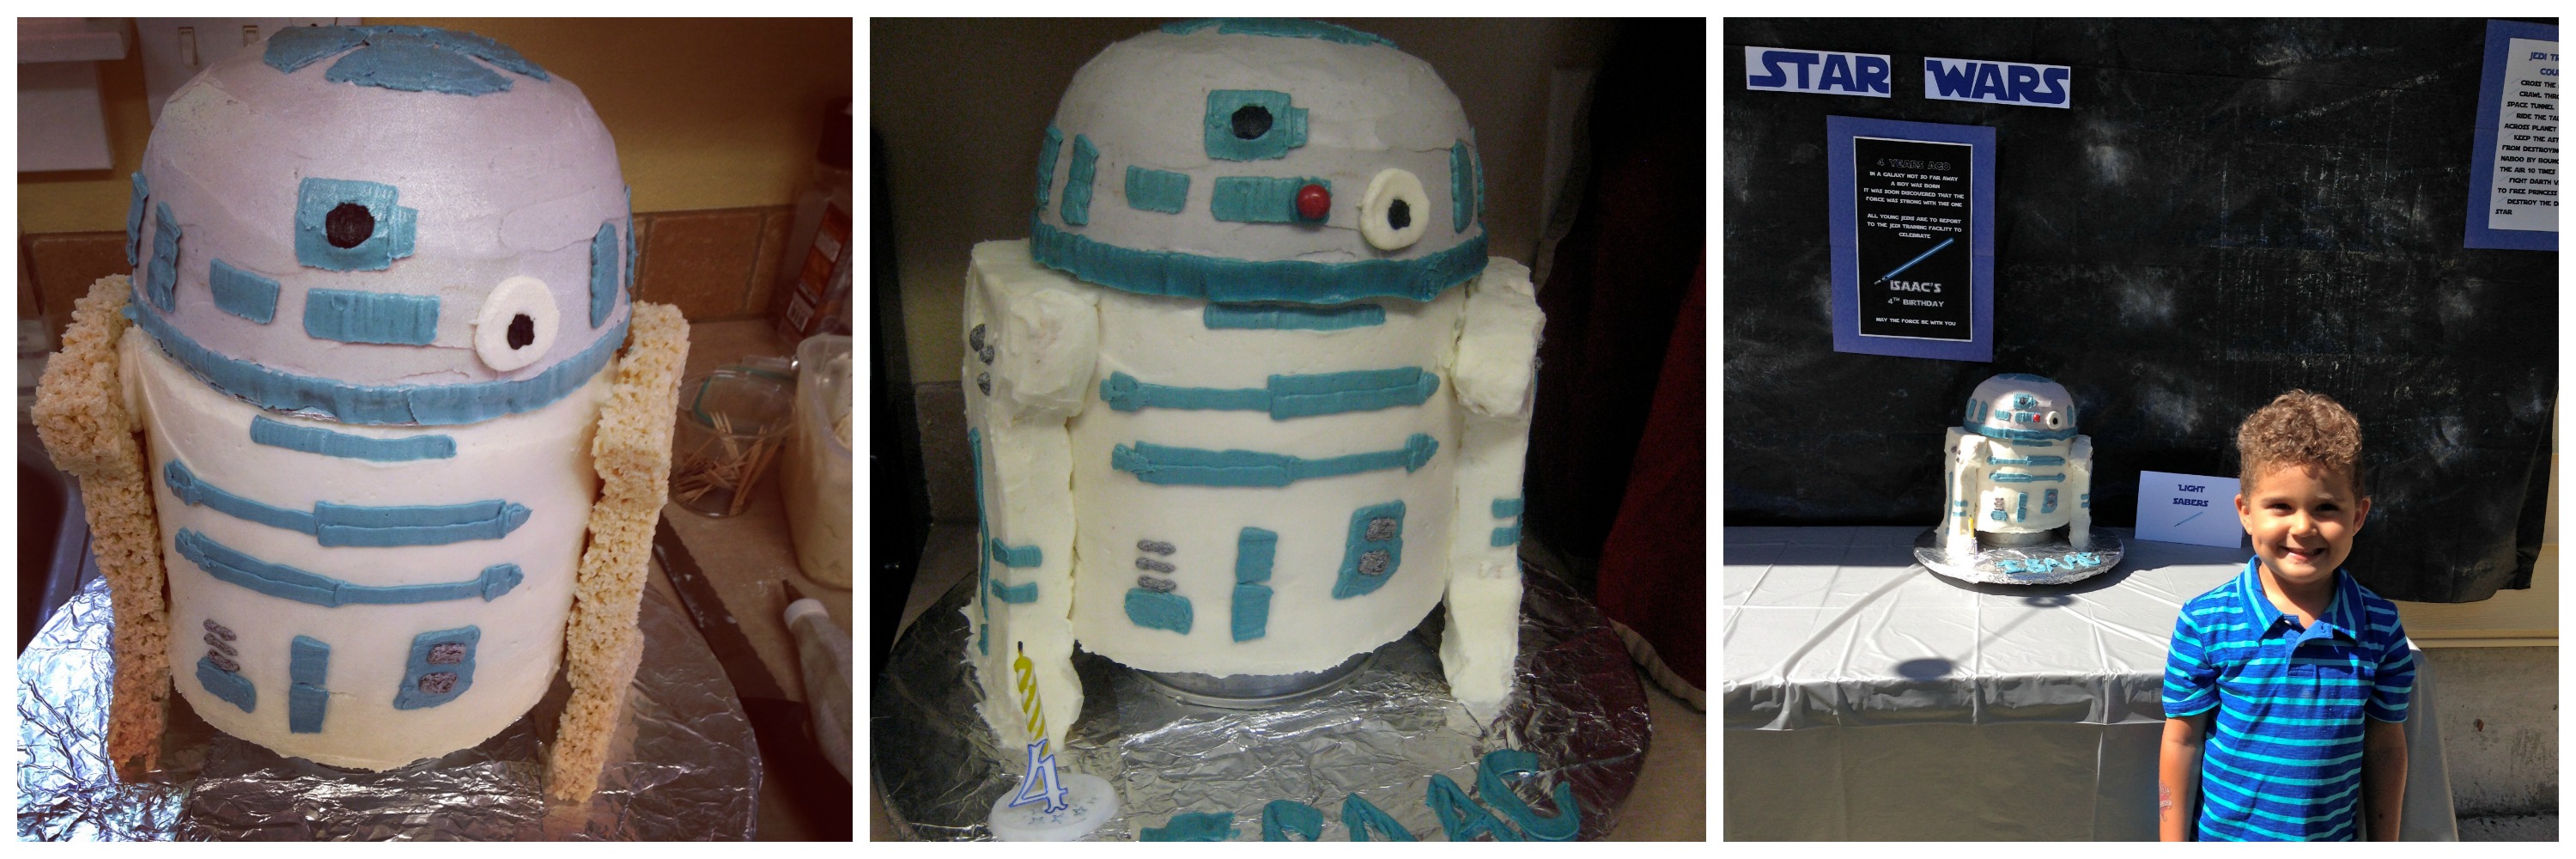 R2D2 cake collage2